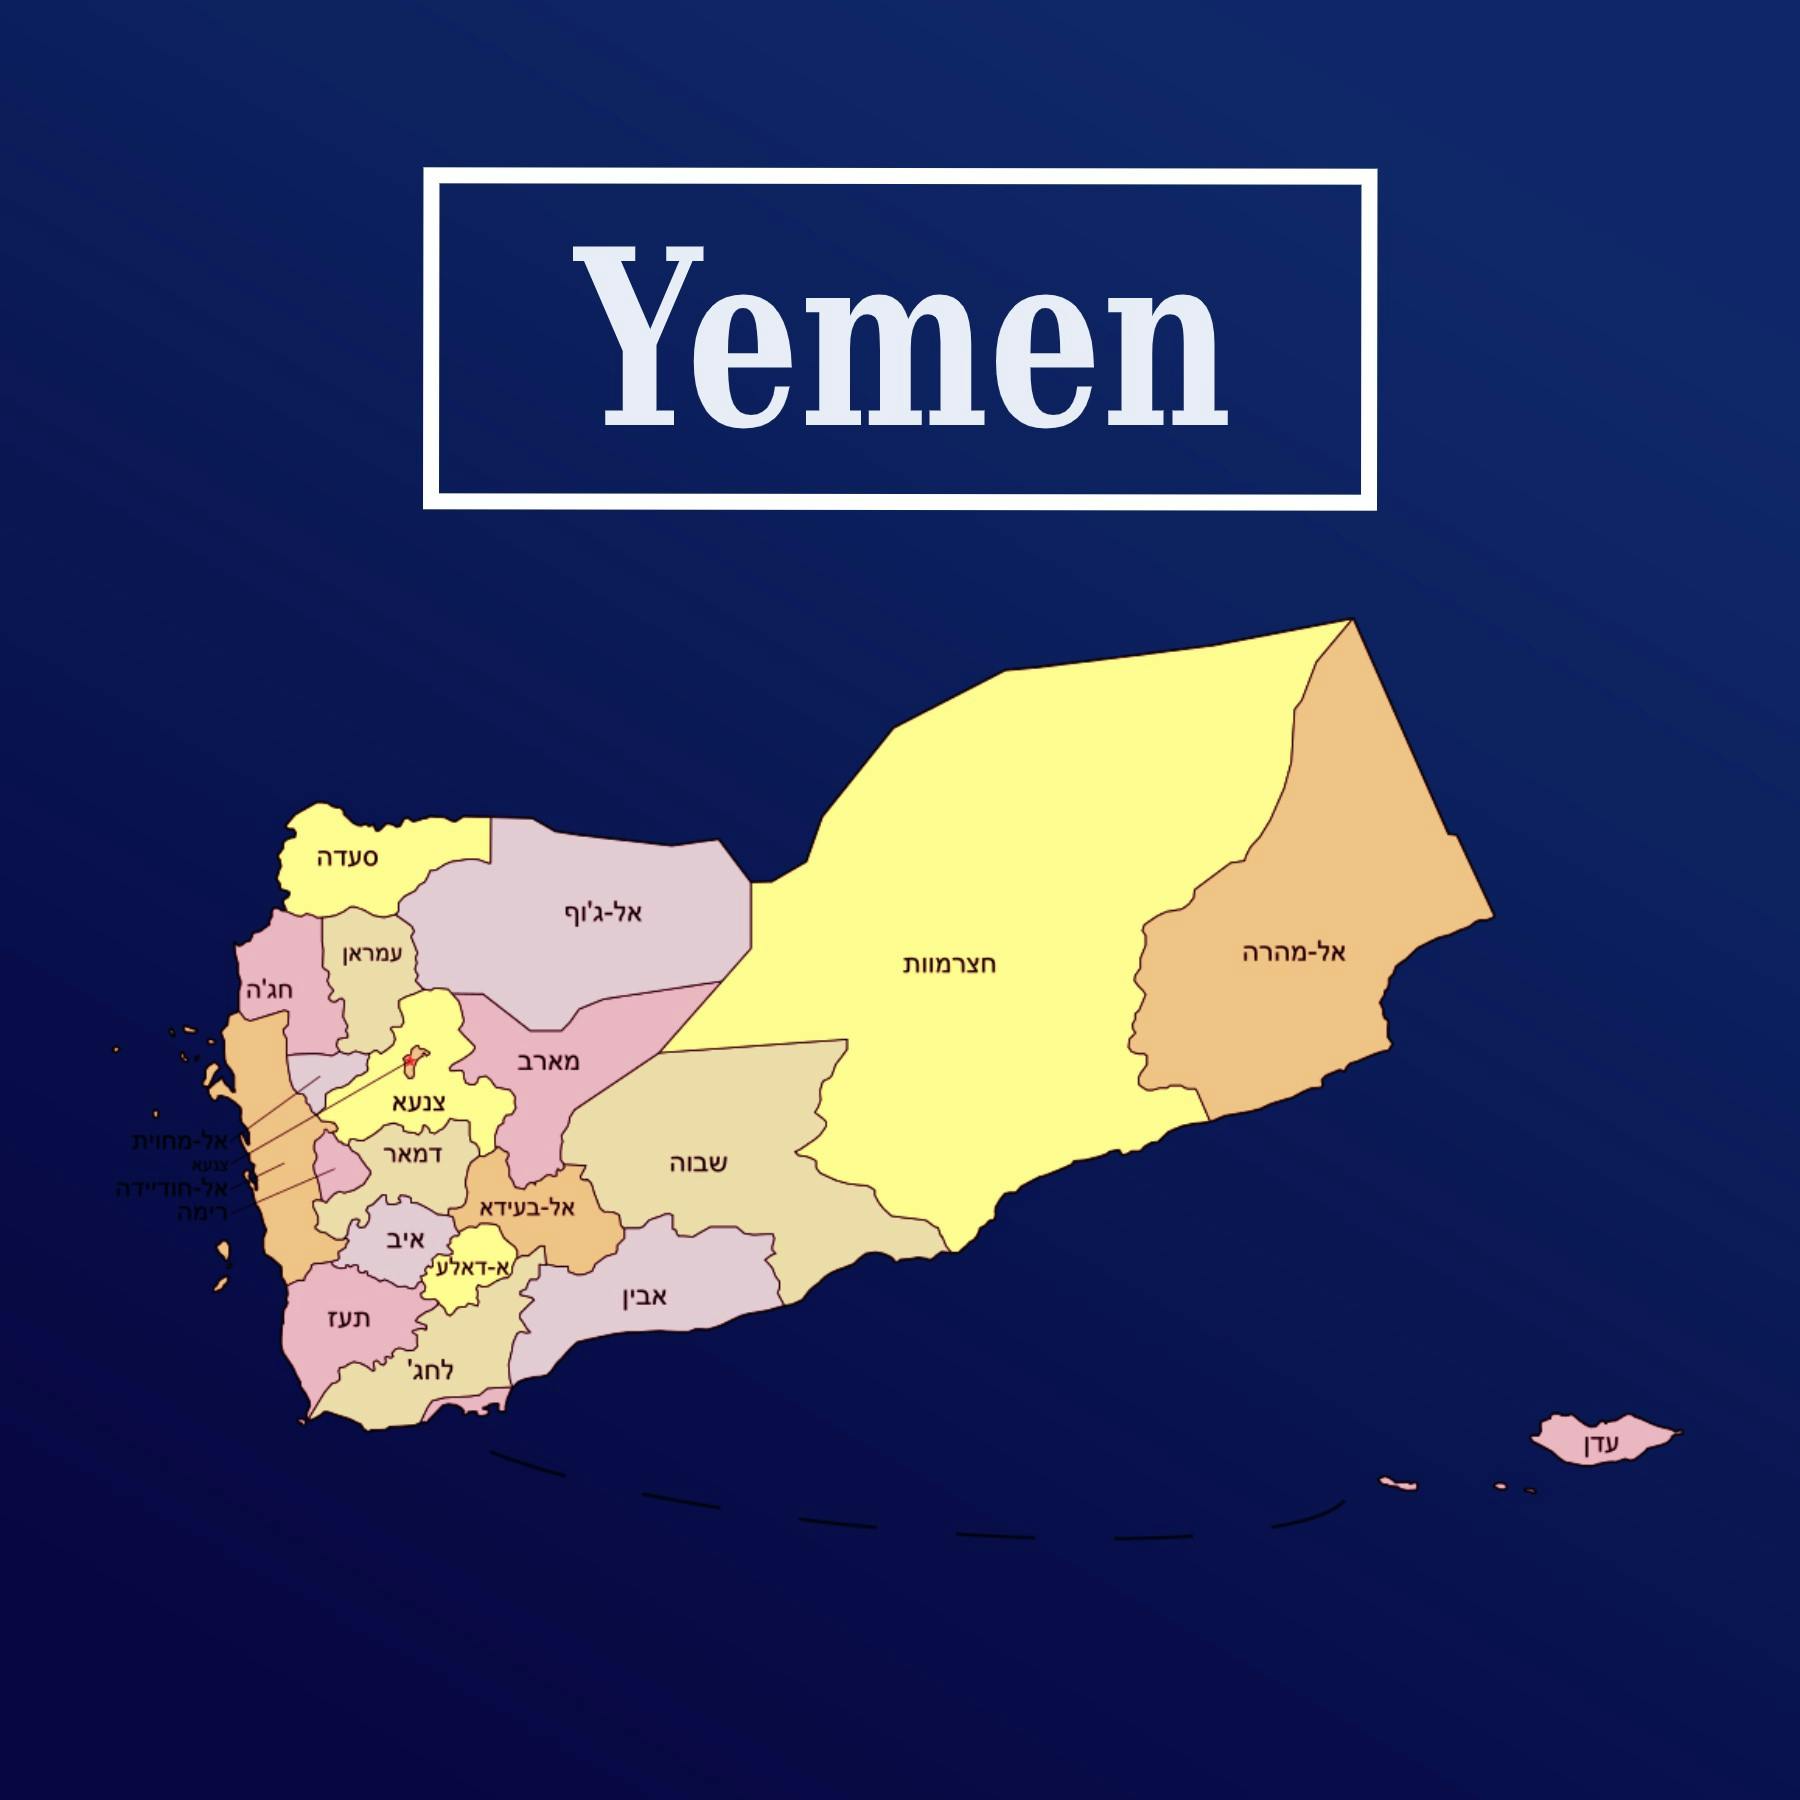 Episode 24: Elana DeLozier and a Stakeholder Analysis of Yemen